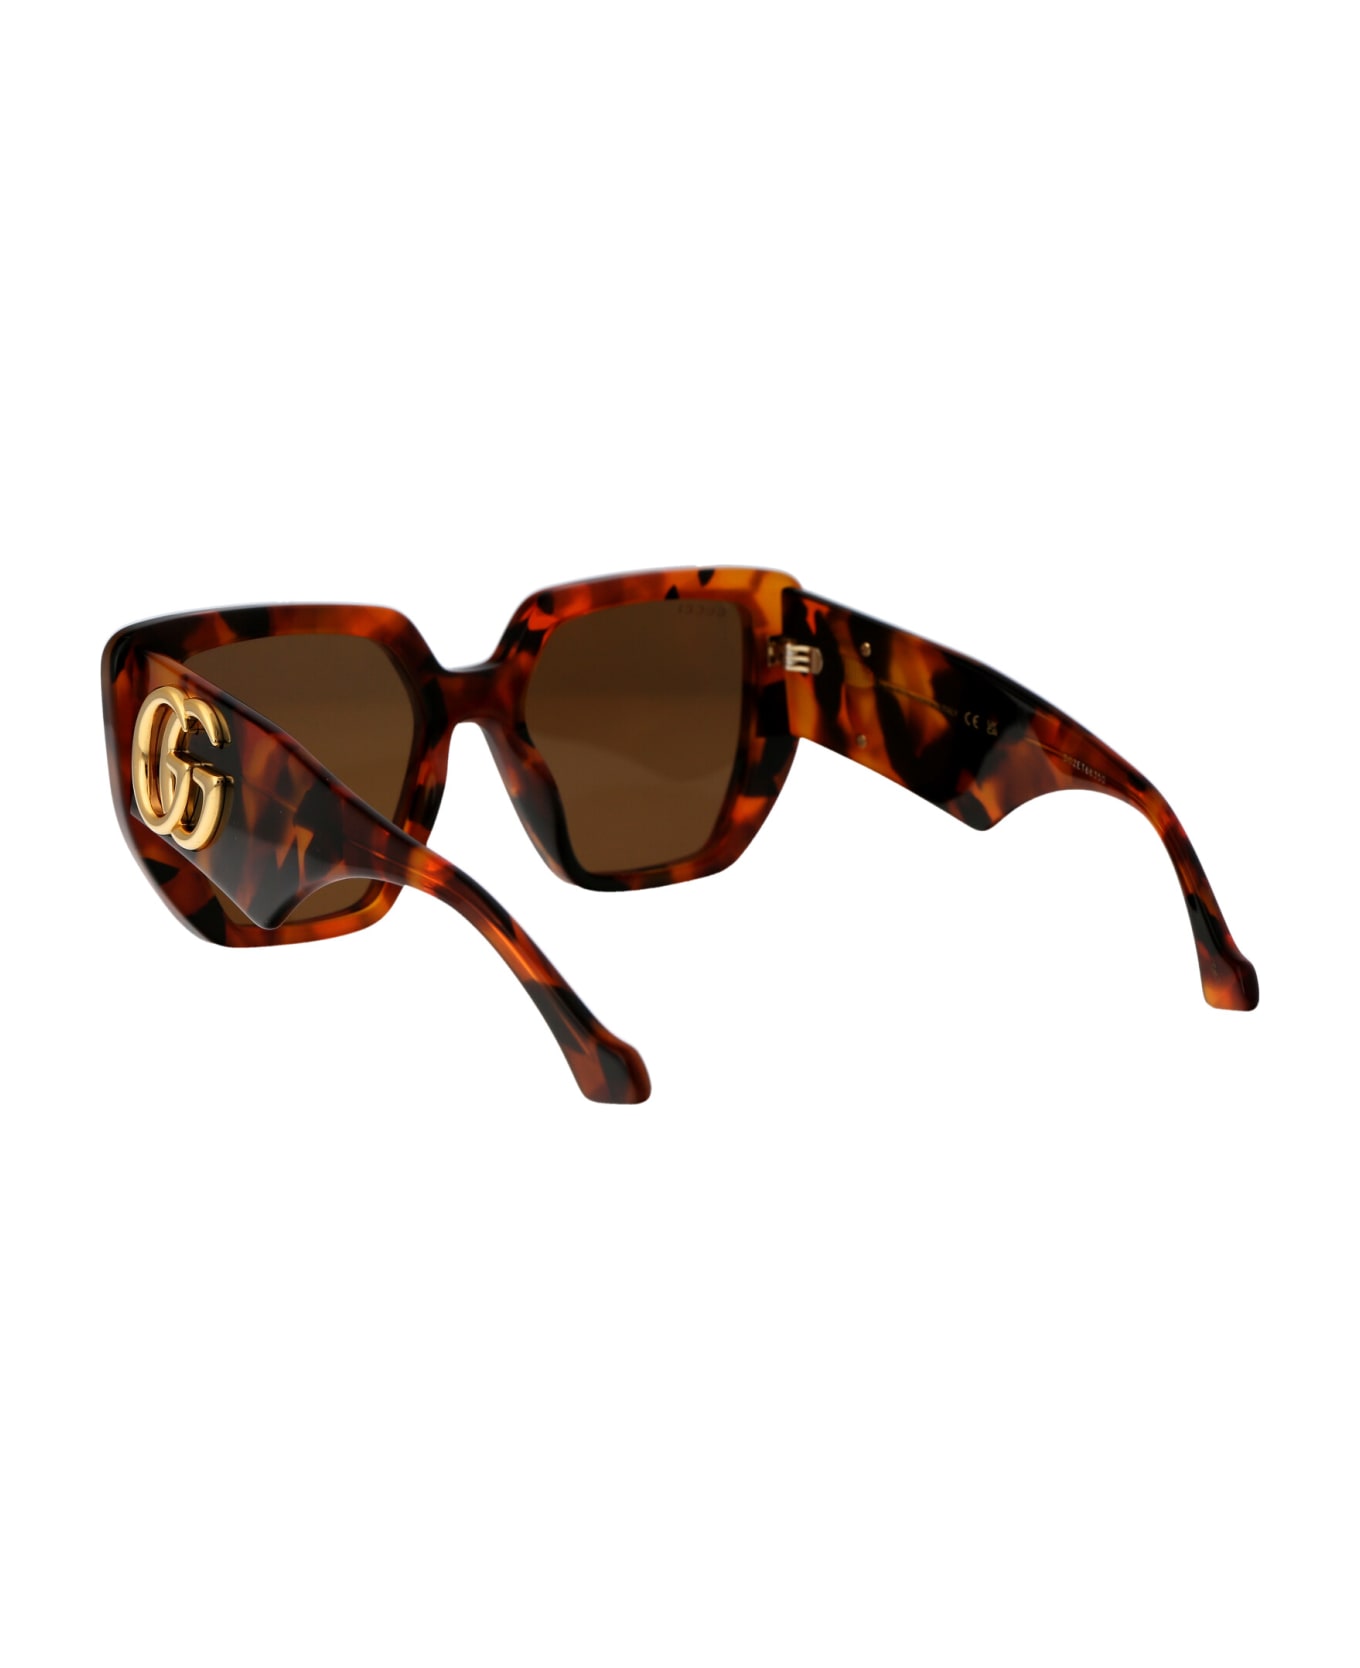 Gucci Eyewear Gg0956s Sunglasses - 007 HAVANA HAVANA BROWN